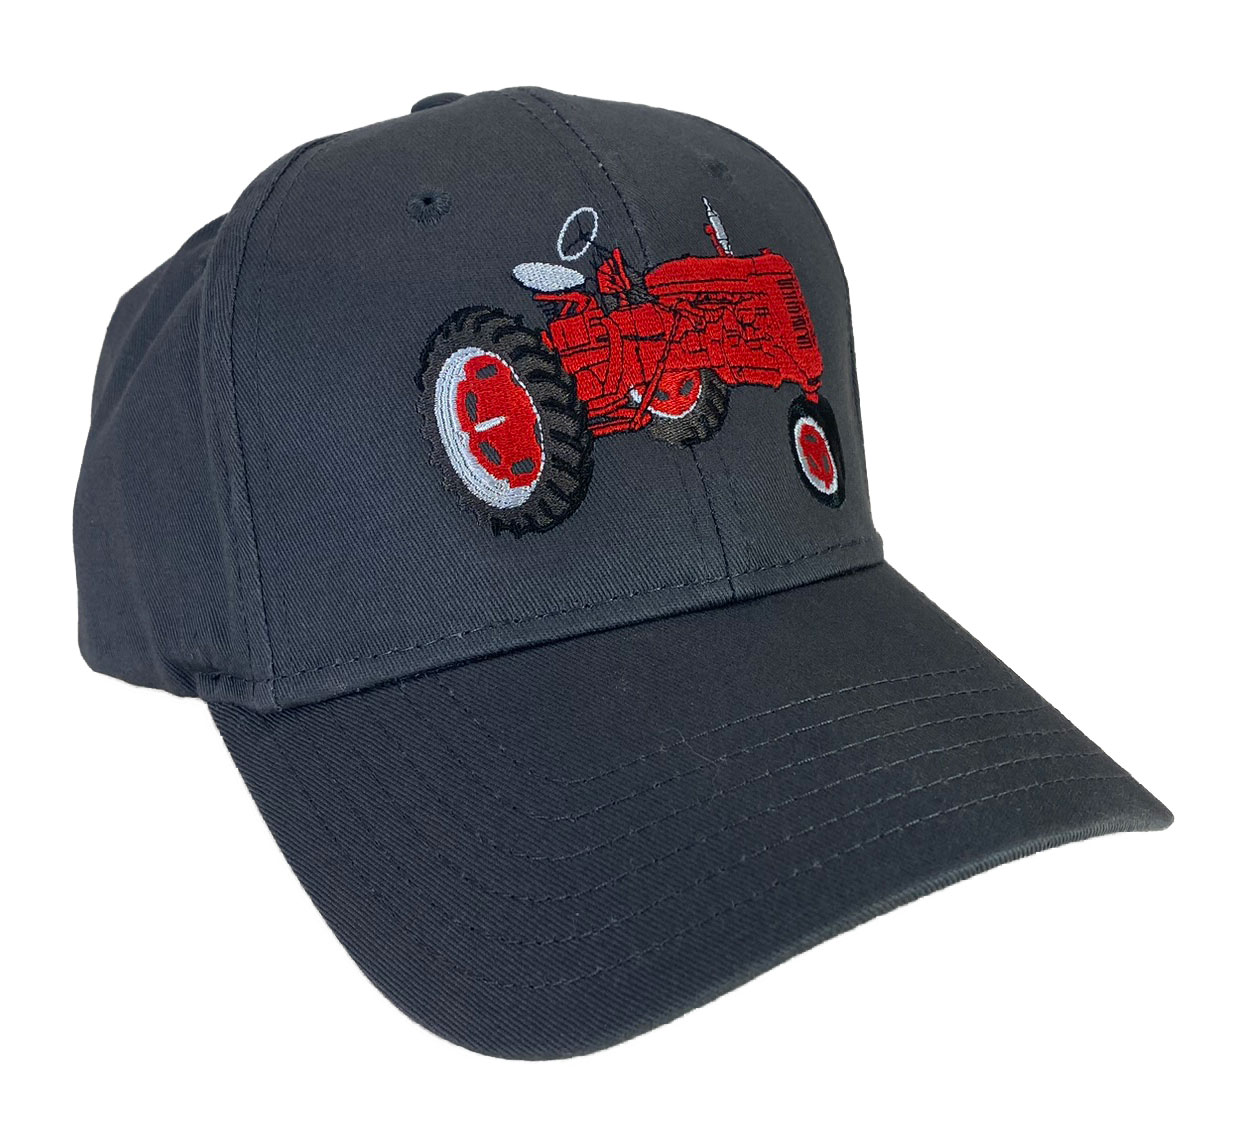 Red - Embroidered Hat Locomotive Tractor International McCormick #44-8000CGV Farmall Logos Cap